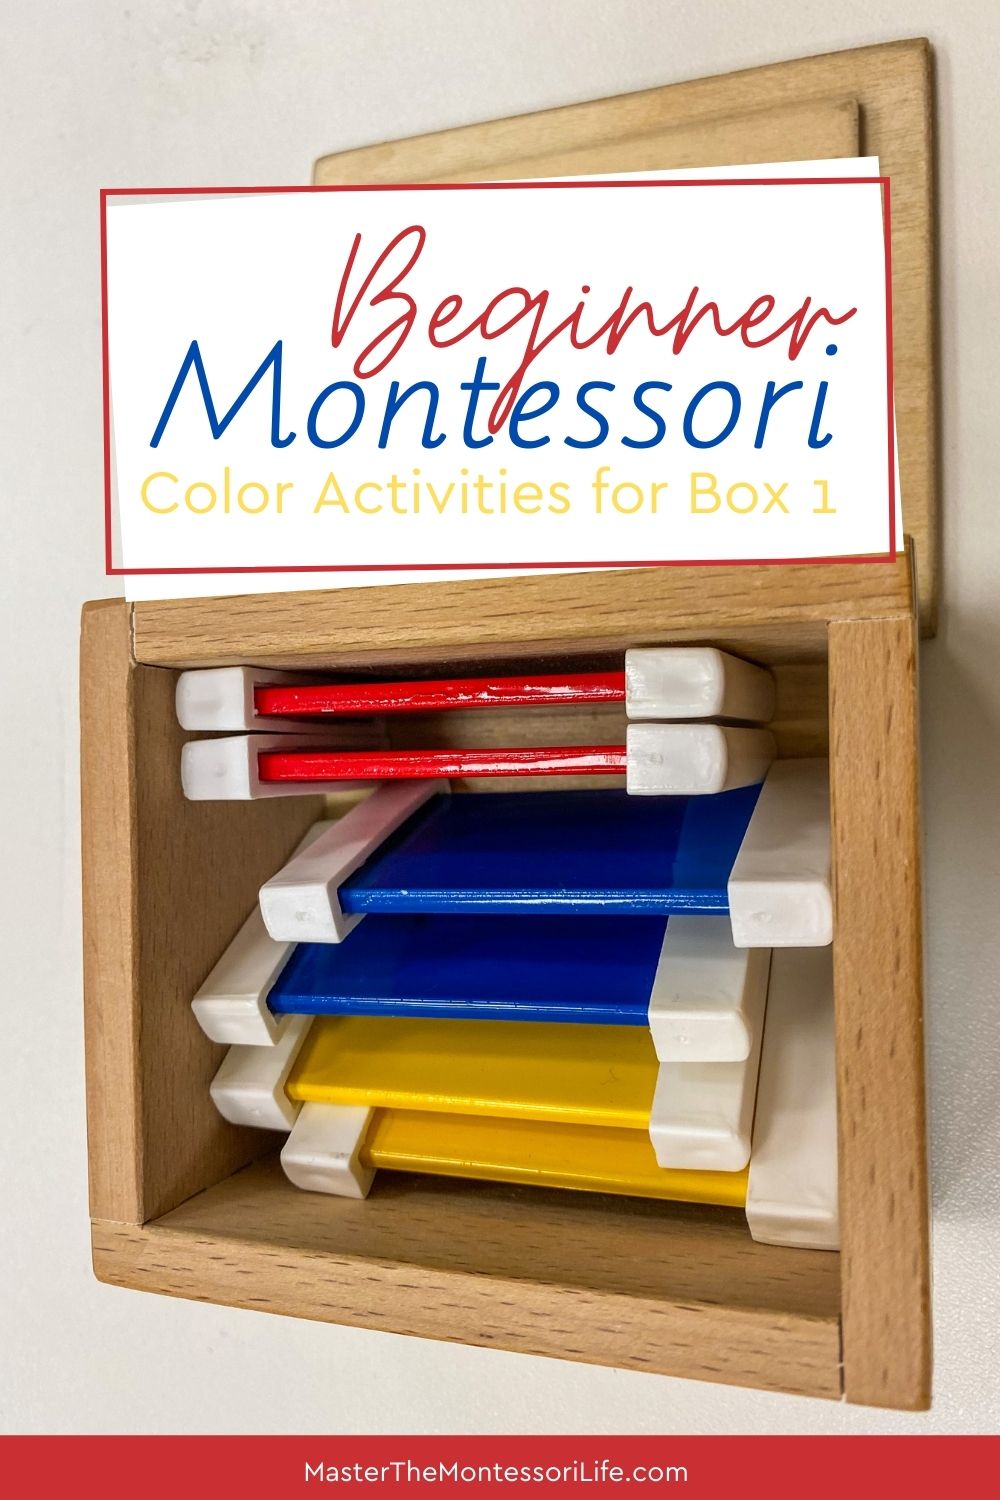 https://masterthemontessorilife.com/wp-content/uploads/2022/03/Beginner-Montessori-Color-Activities-for-Box-1-1.jpg